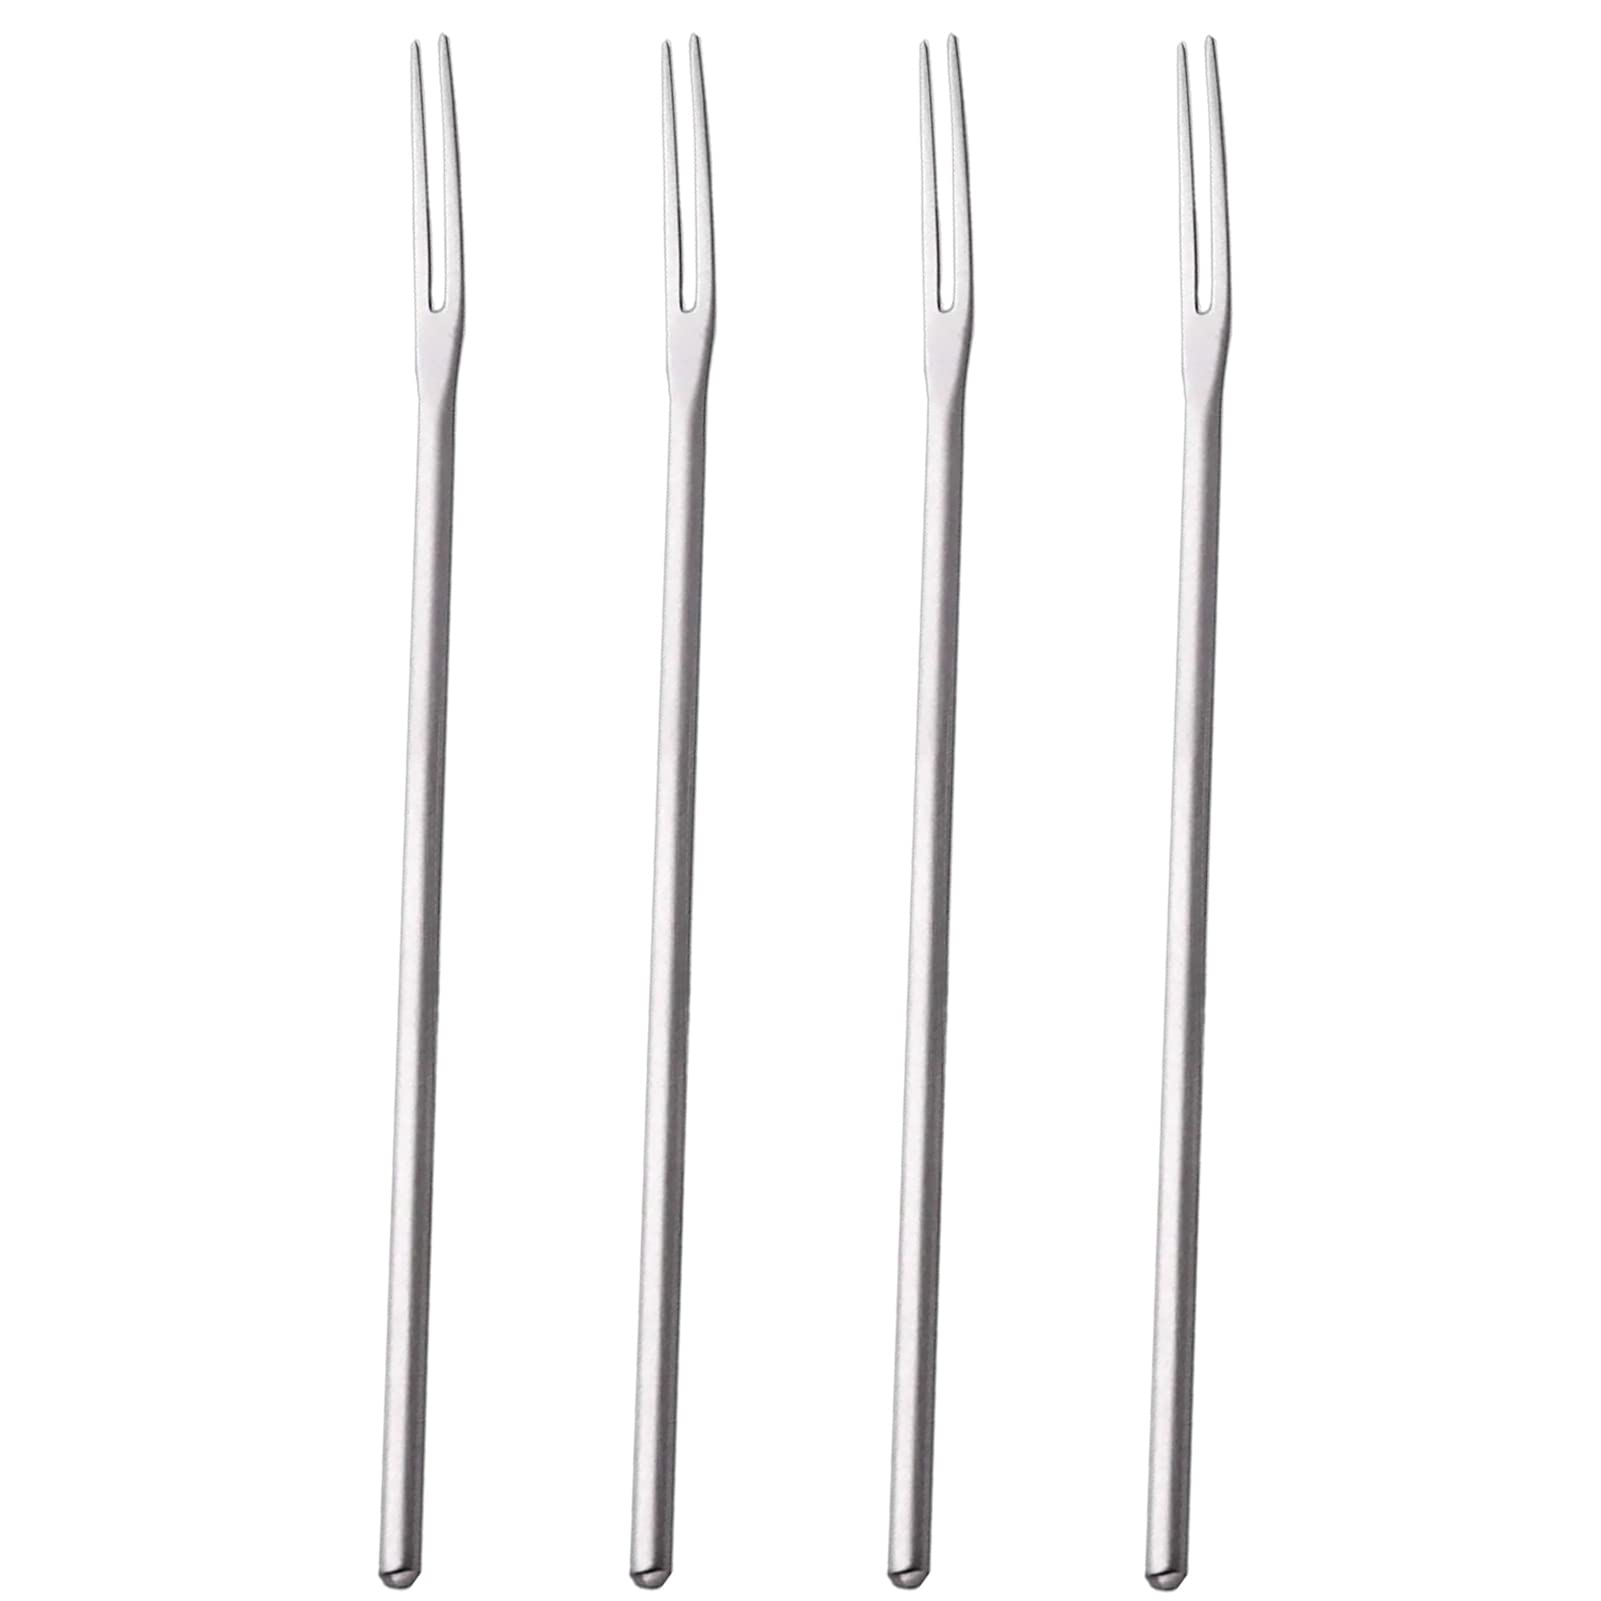 Pickle Fork, Stainless Steel Salad Forks, 8.6 Inches Round Handle Olive Forks, Long Handle 2-Tine Fork for Dessert Appetizer Cocktail Fruit and Vegetables, Set of 4, Silver